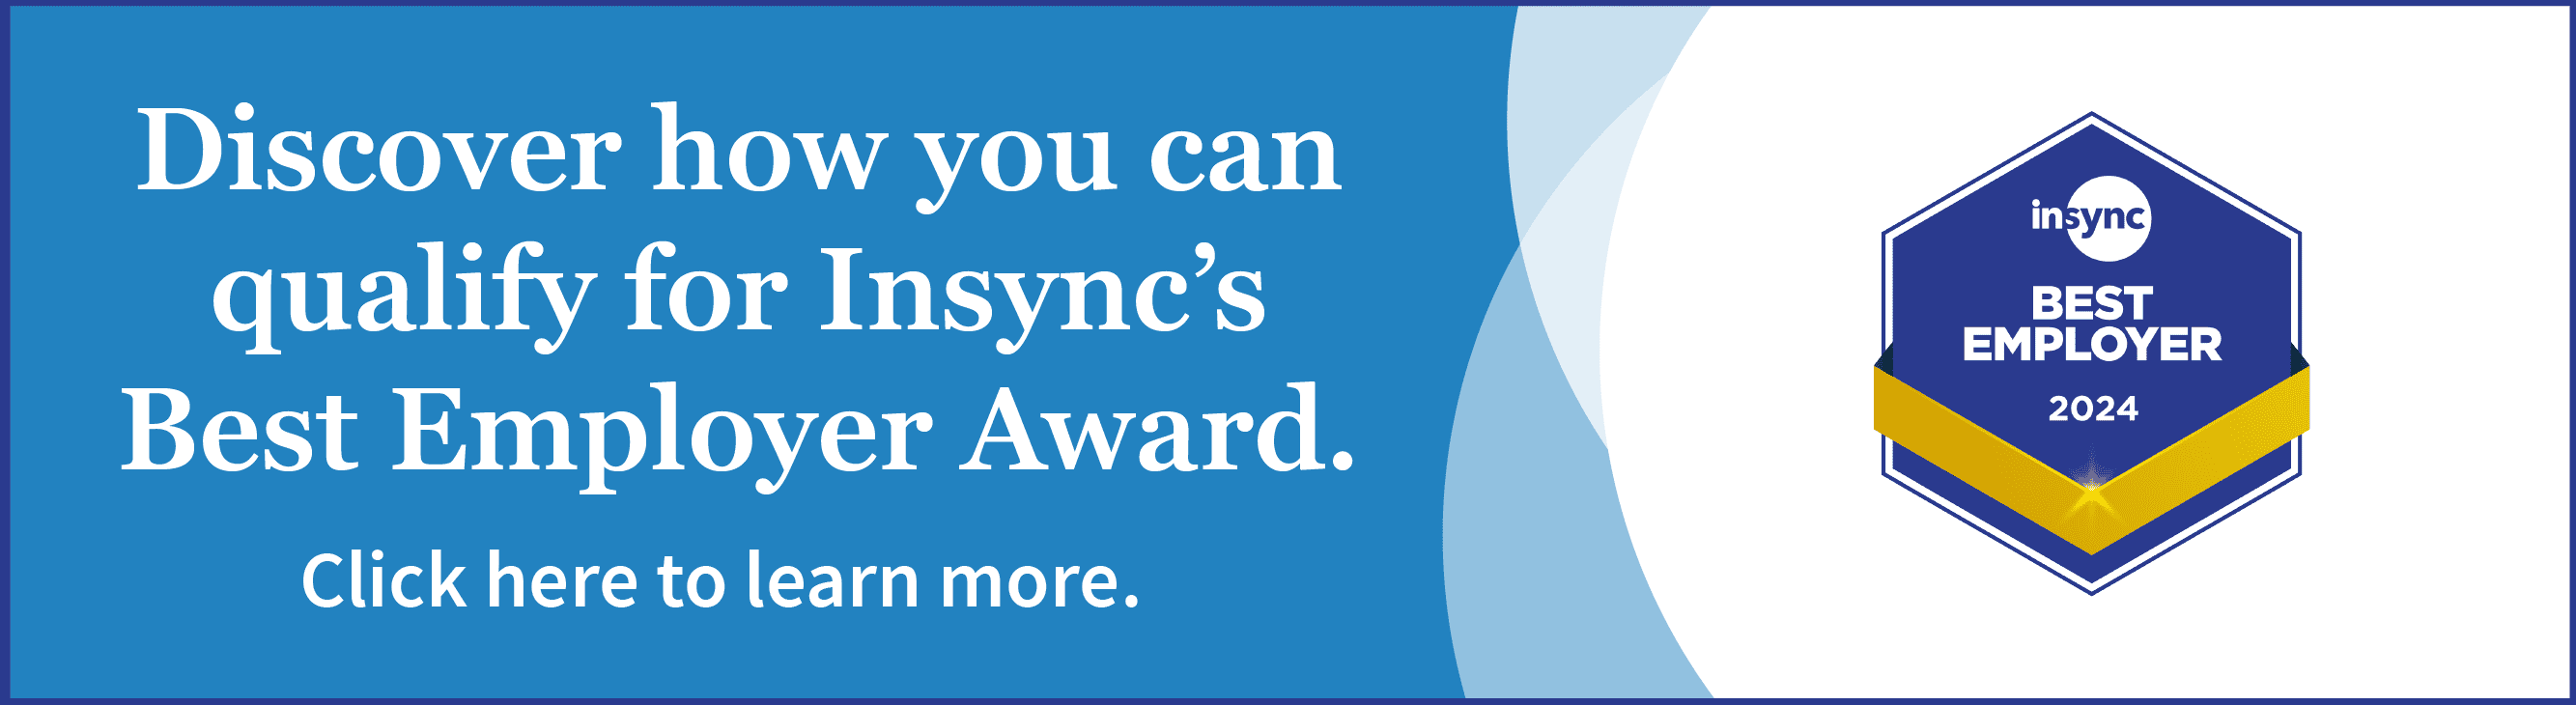 Insync Best Employer Award 2024